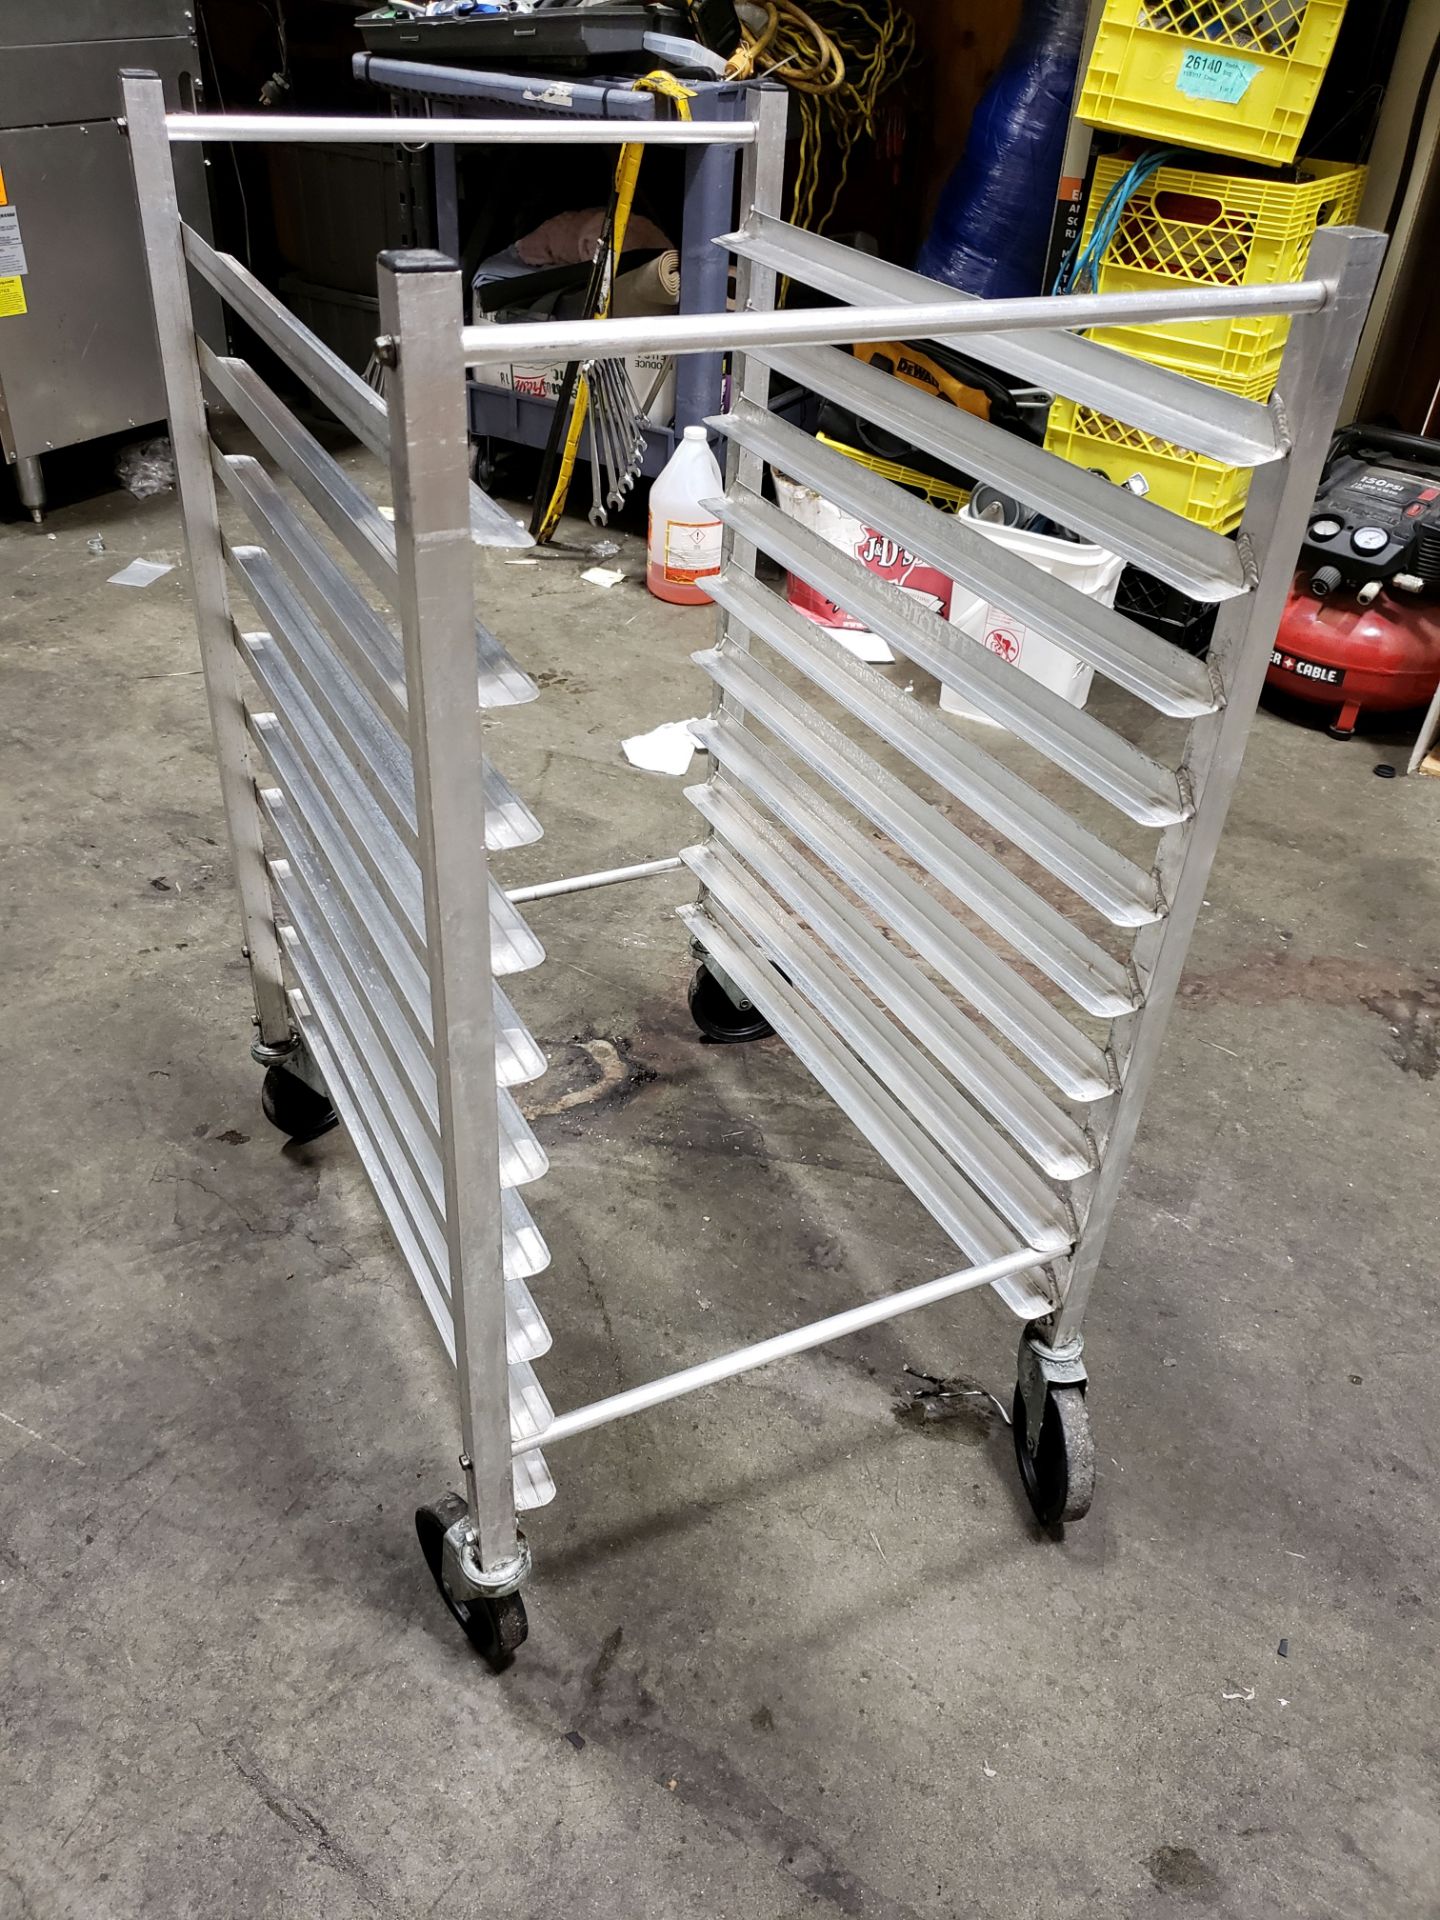 Aluminum 10 Pan Sheet Pan Rack on Casters - Advance Tabco